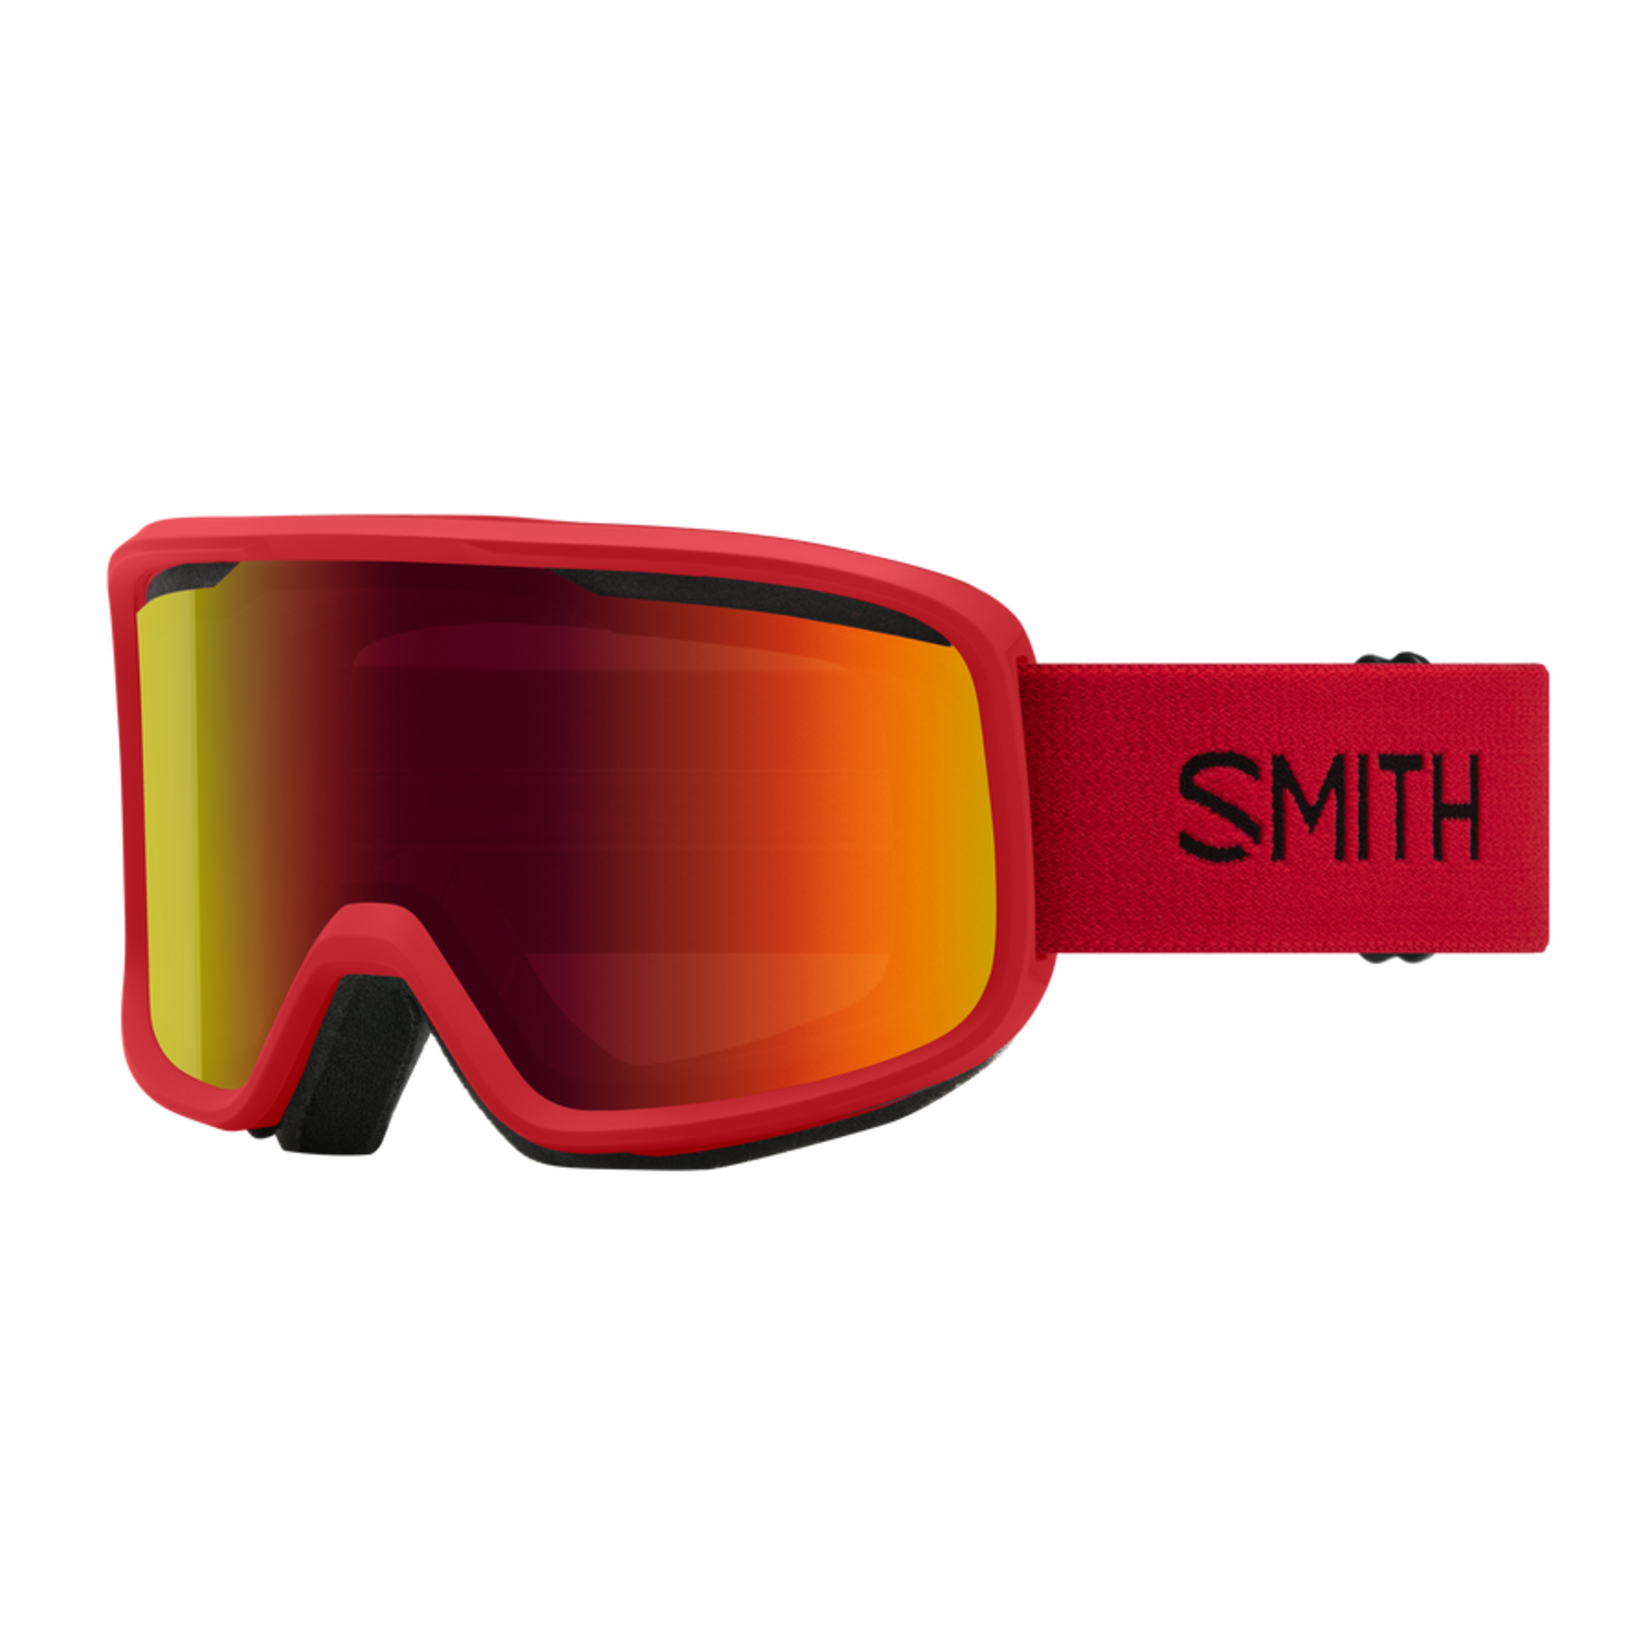 Smith Smith Frontier Goggles